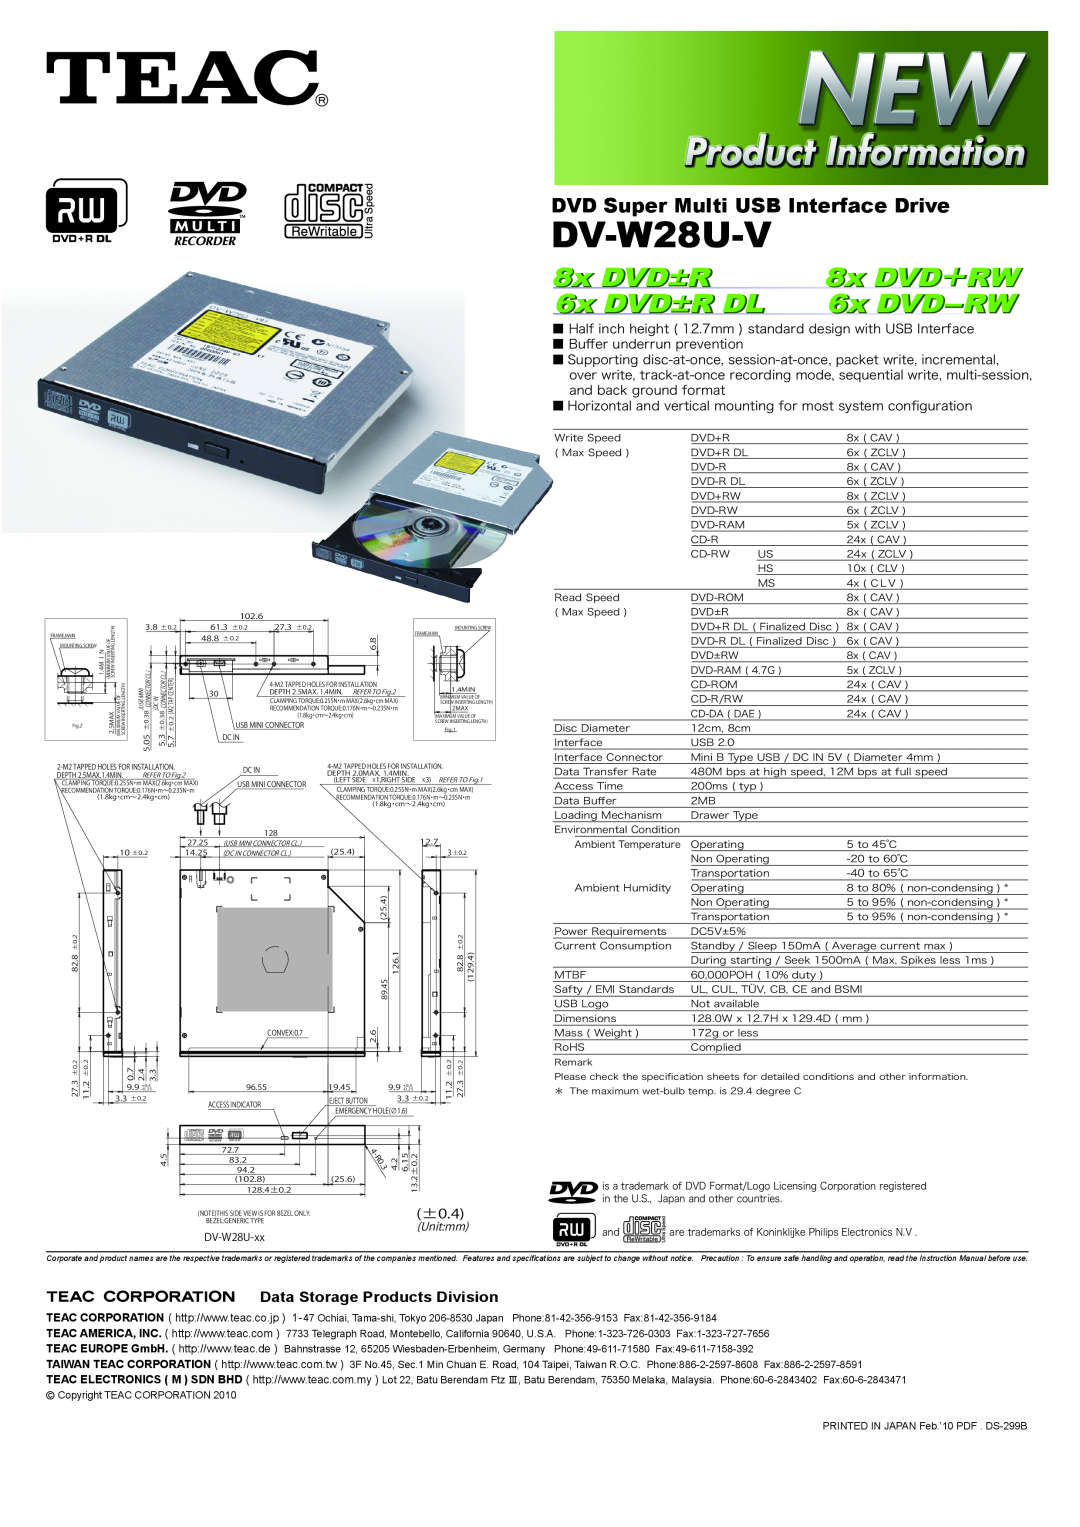 Teac DV-W28U-V specifications 8x DVD ±R, 8x DVD ＋RW, 6x DVD ±R DL, 6x DVD -RW, DVD Super Multi USB Interface Drive, ±0.4 